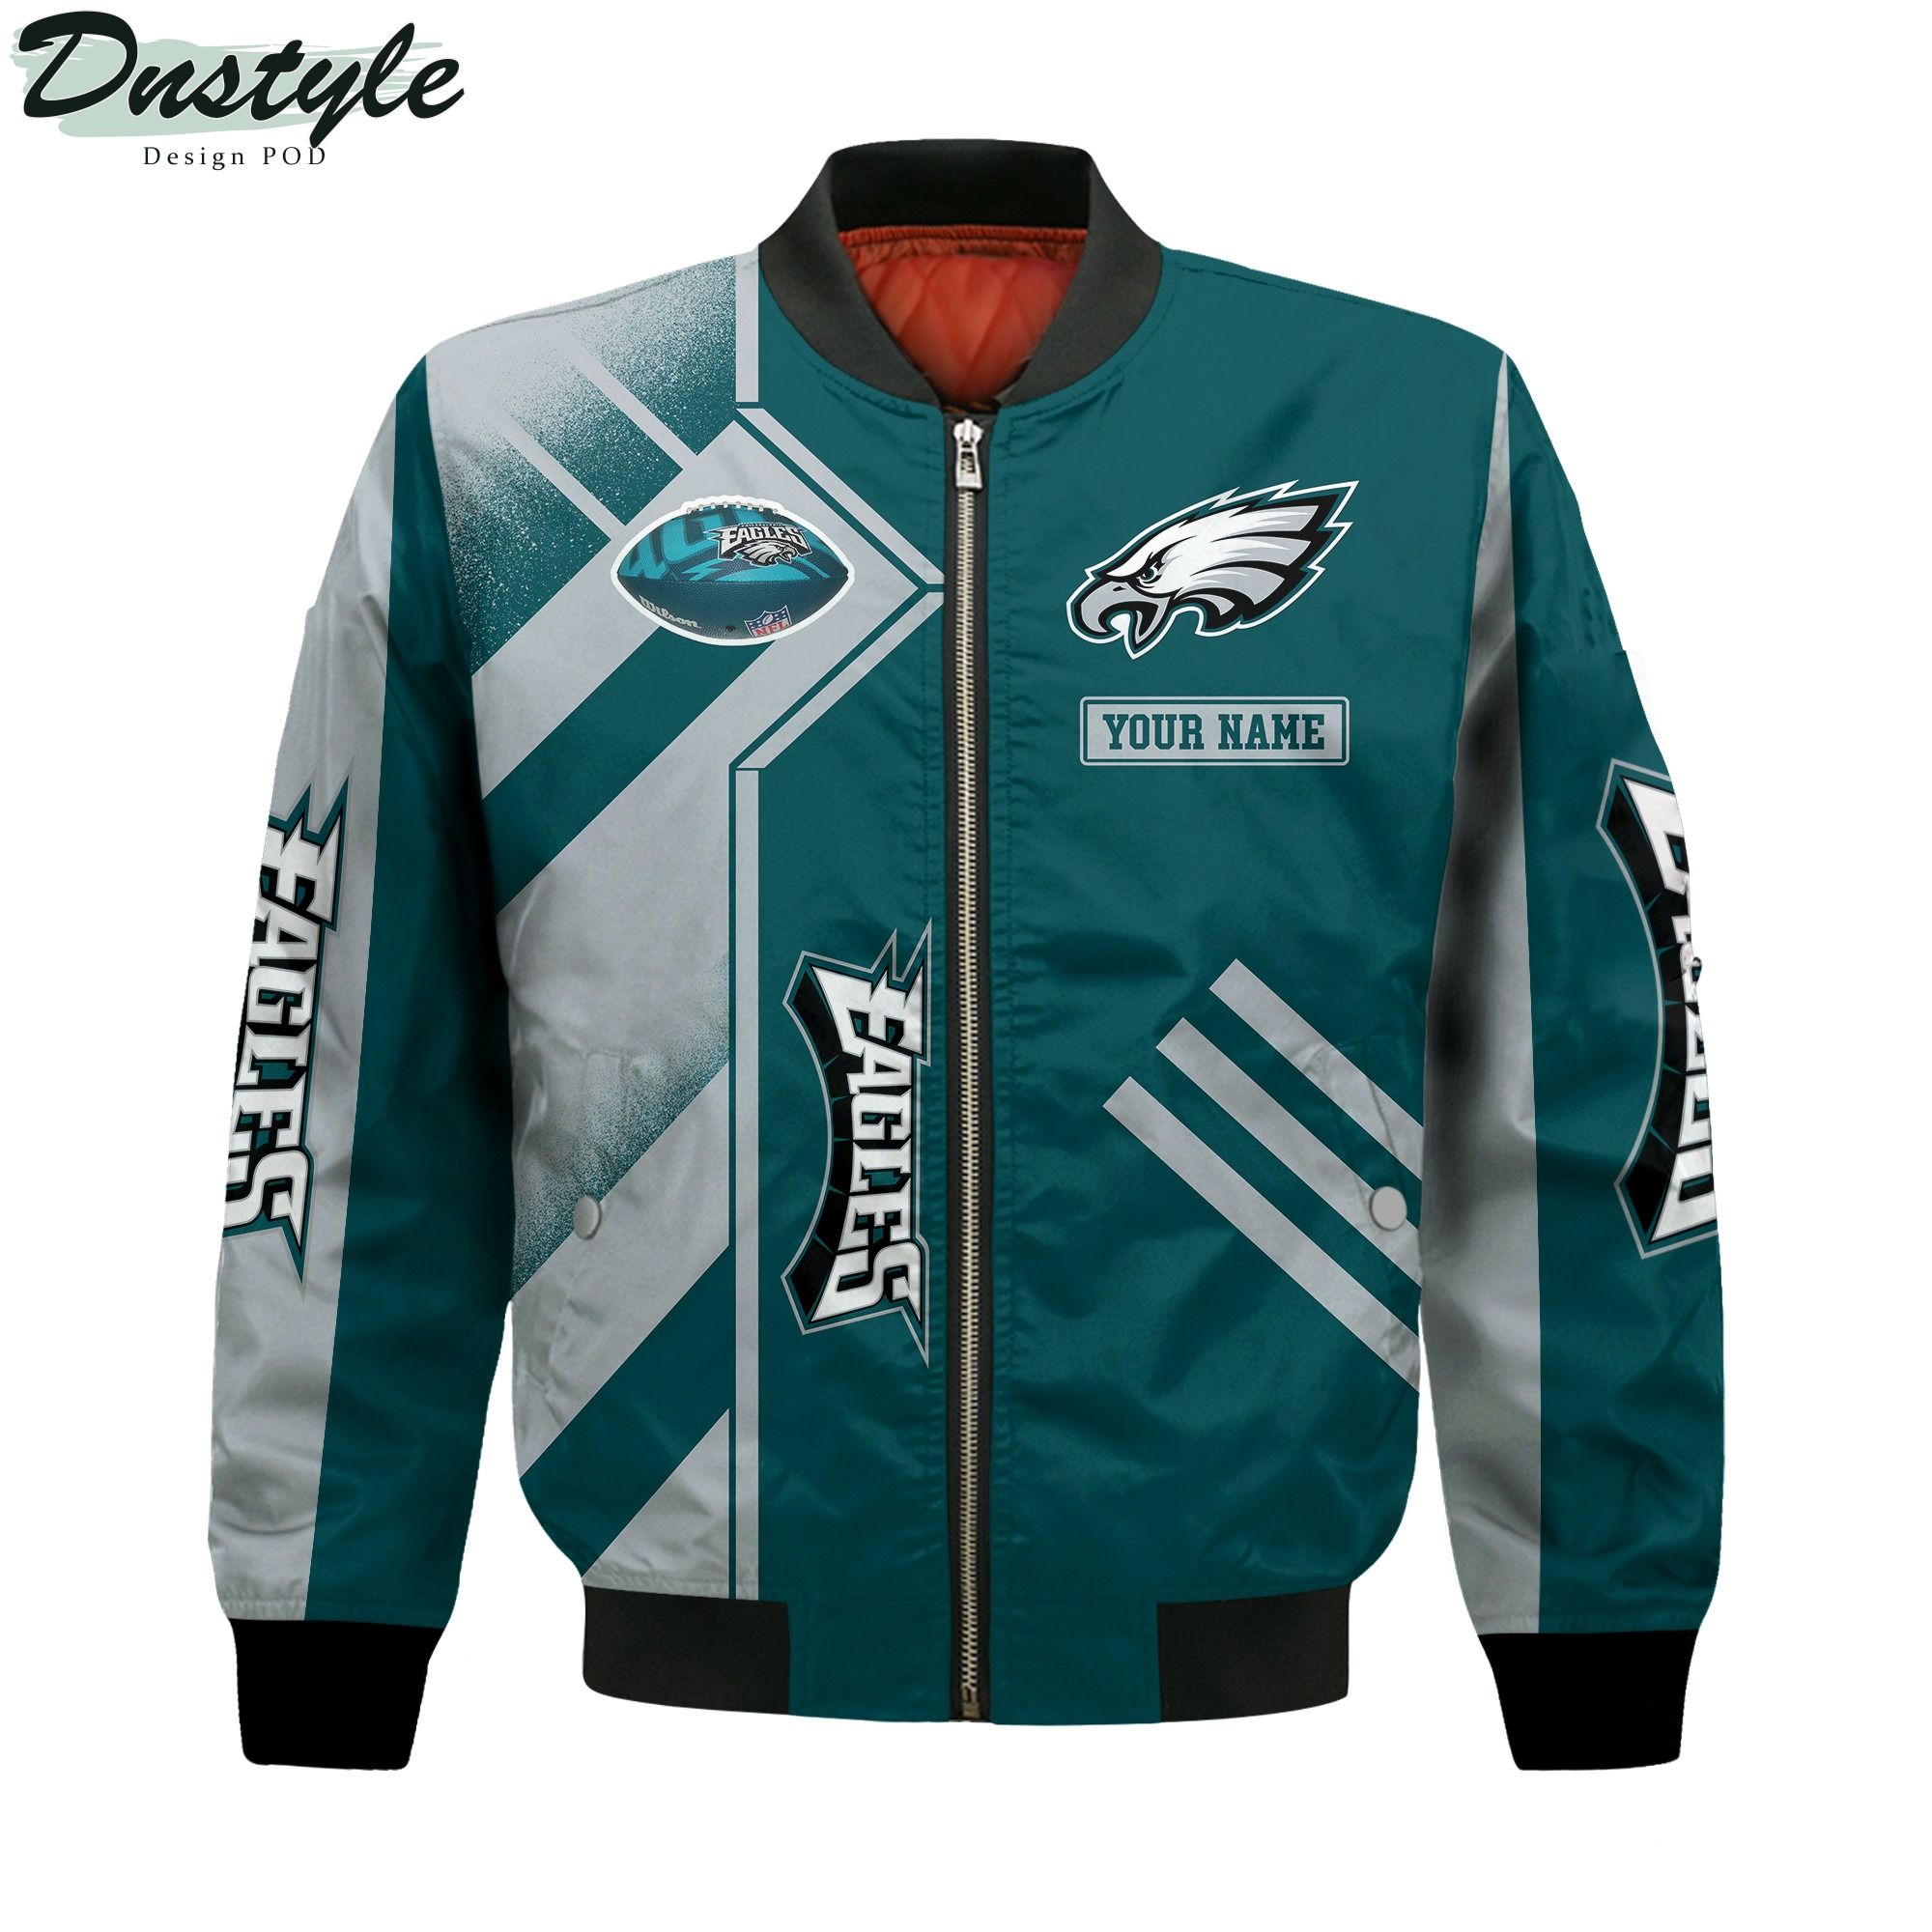 Philadelphia Eagles NFL 1X Super Bowl Champions Custom Name Bomber Jacket